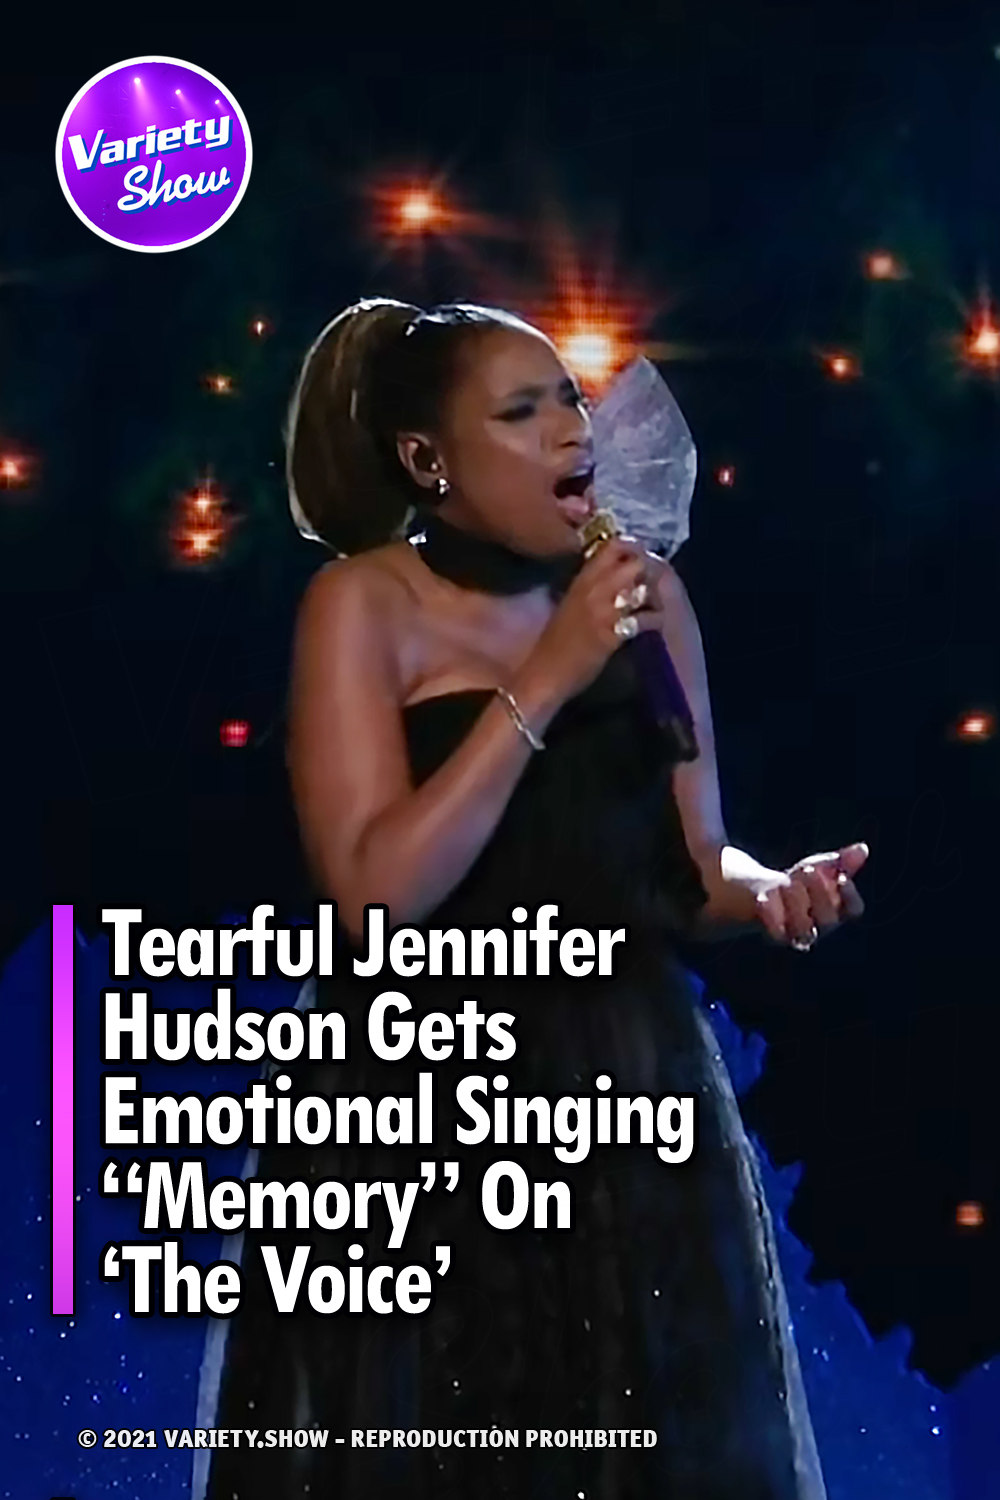 Tearful Jennifer Hudson Gets Emotional Singing “Memory” On ‘The Voice’